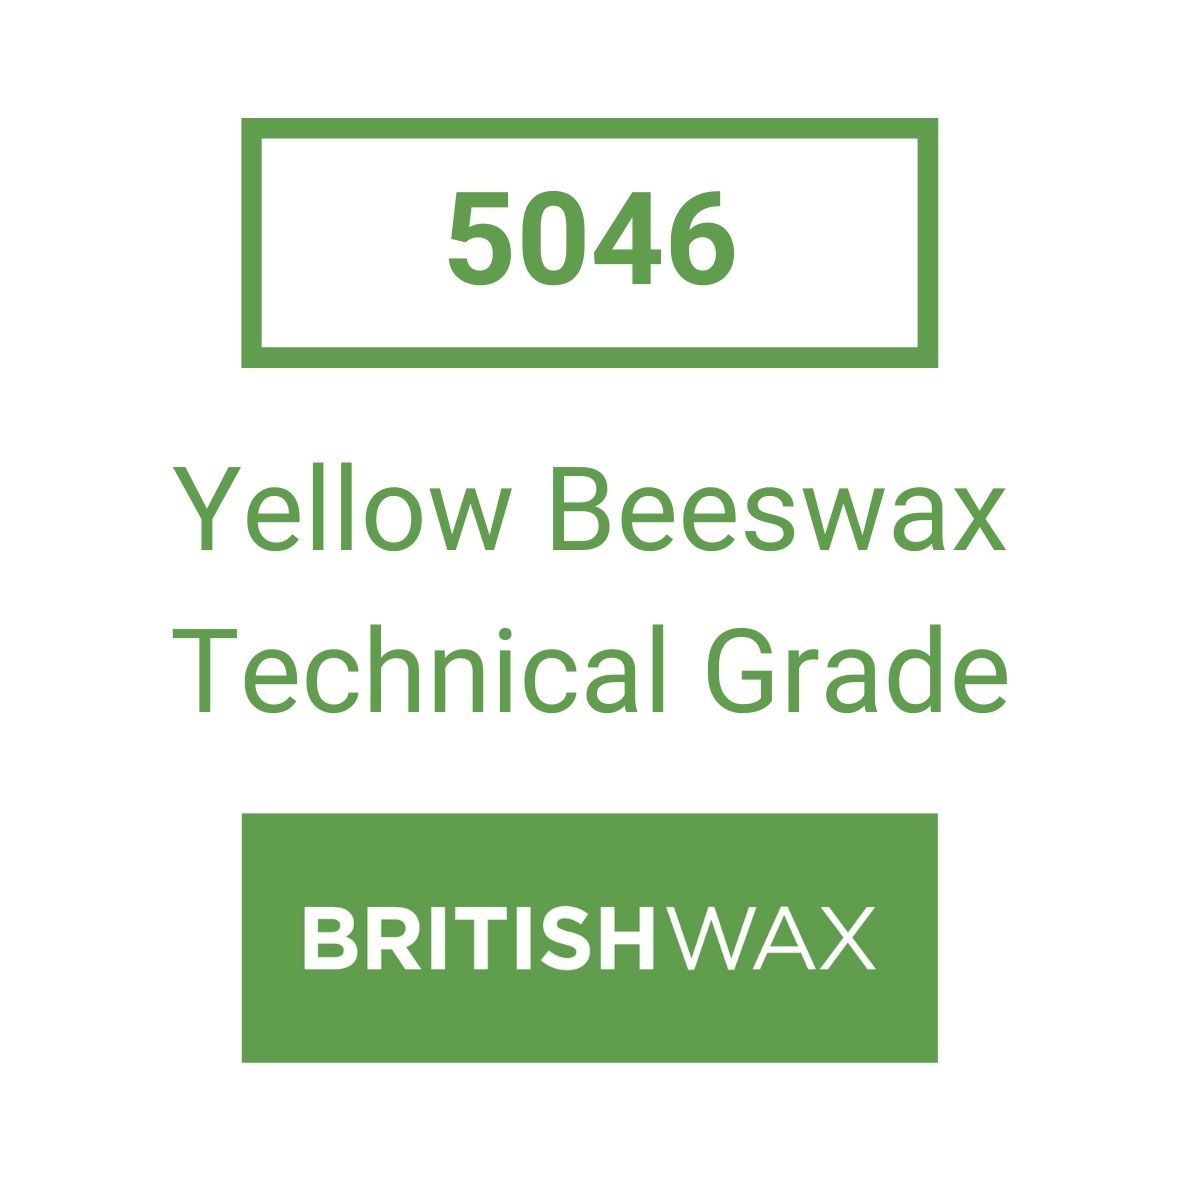 5046 Yellow Beeswax Technical Grade